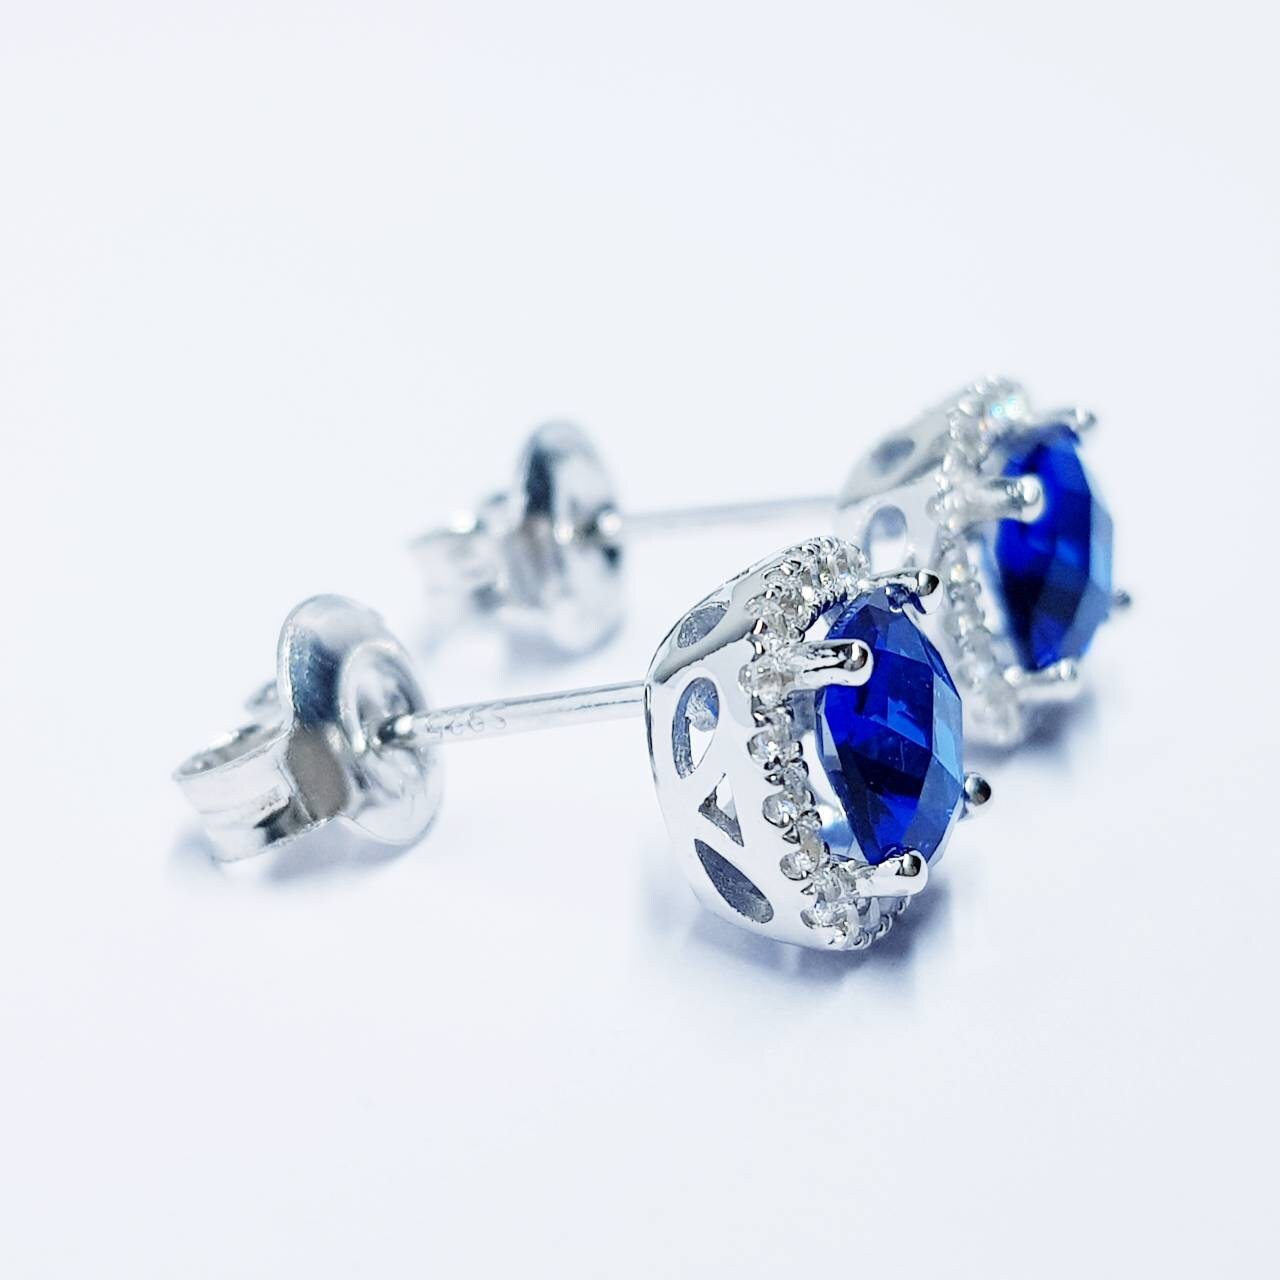 Blue Sapphire Earrings, Sapphire Bridal Earrings, Sterling Silver CZ Blue Sapphire Stud Earrings,Round CZ Stud Earrings,Bridesmaids Earrings